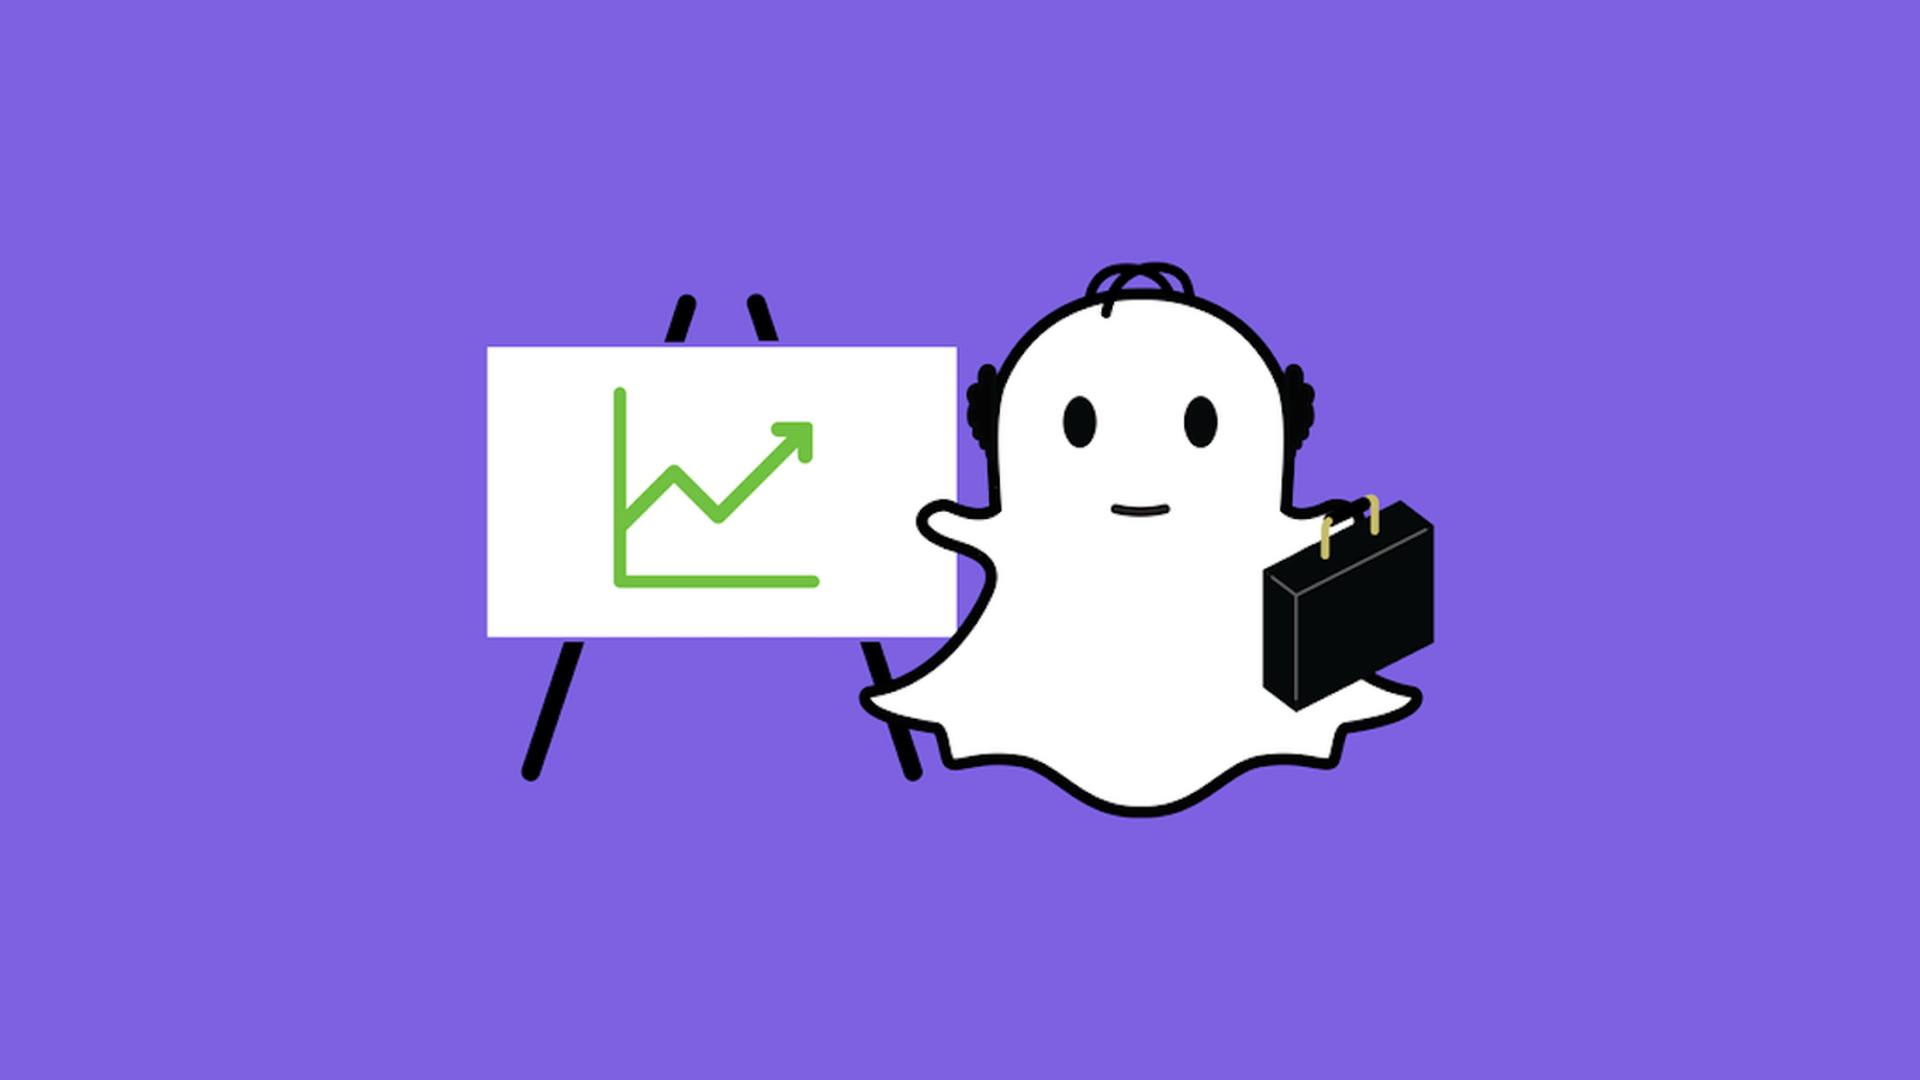 Snapchat "ghost" next to an upward financial chart.